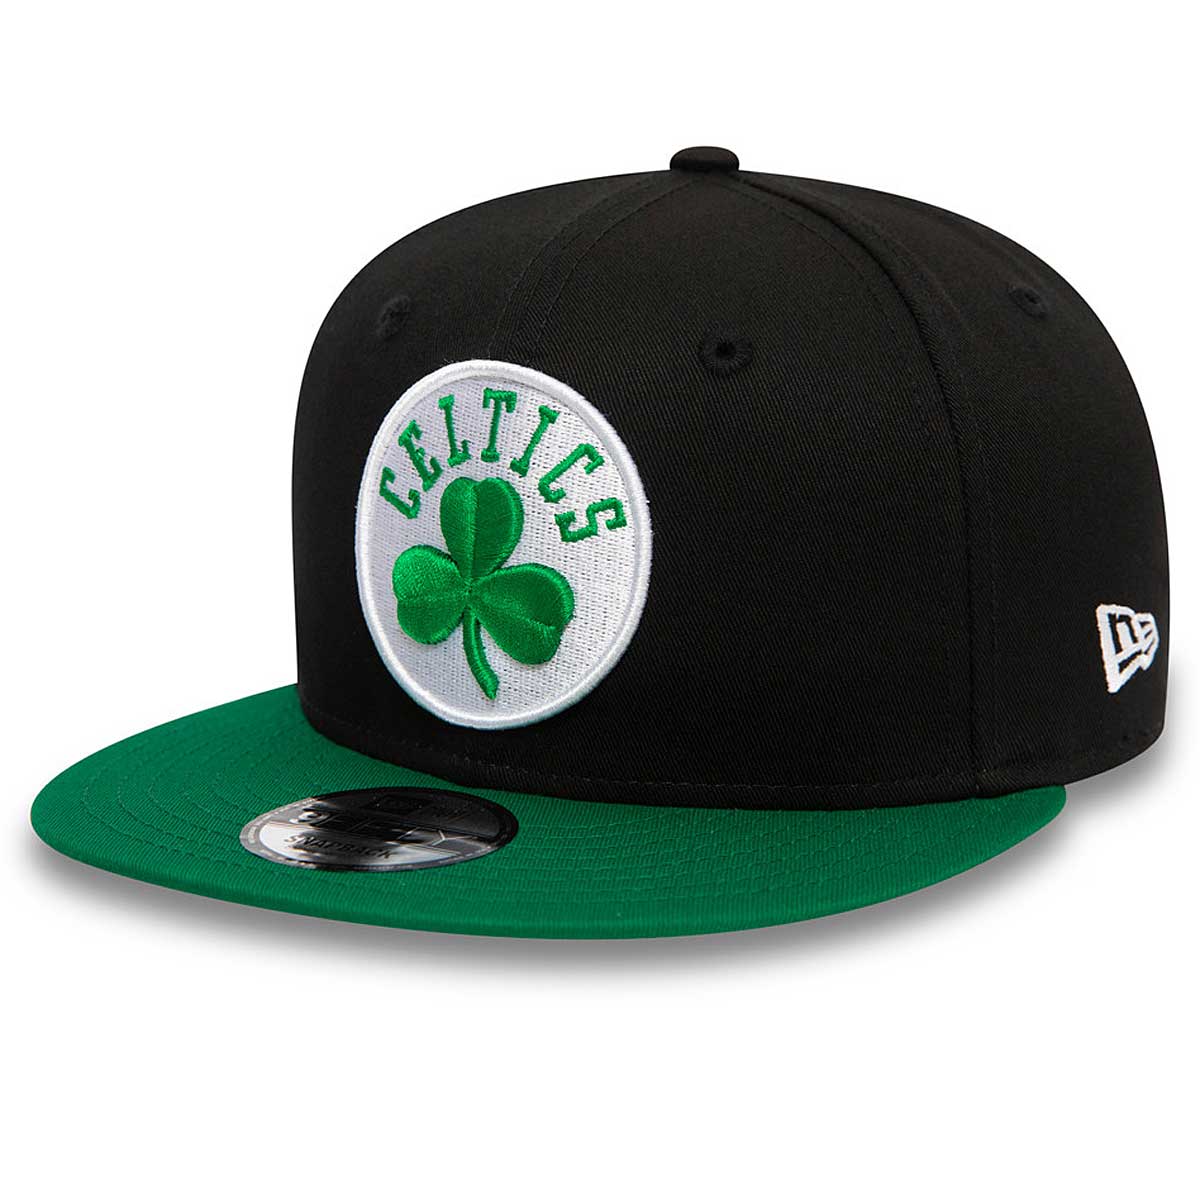 New Era Nba 950 Boston Celtics, Black